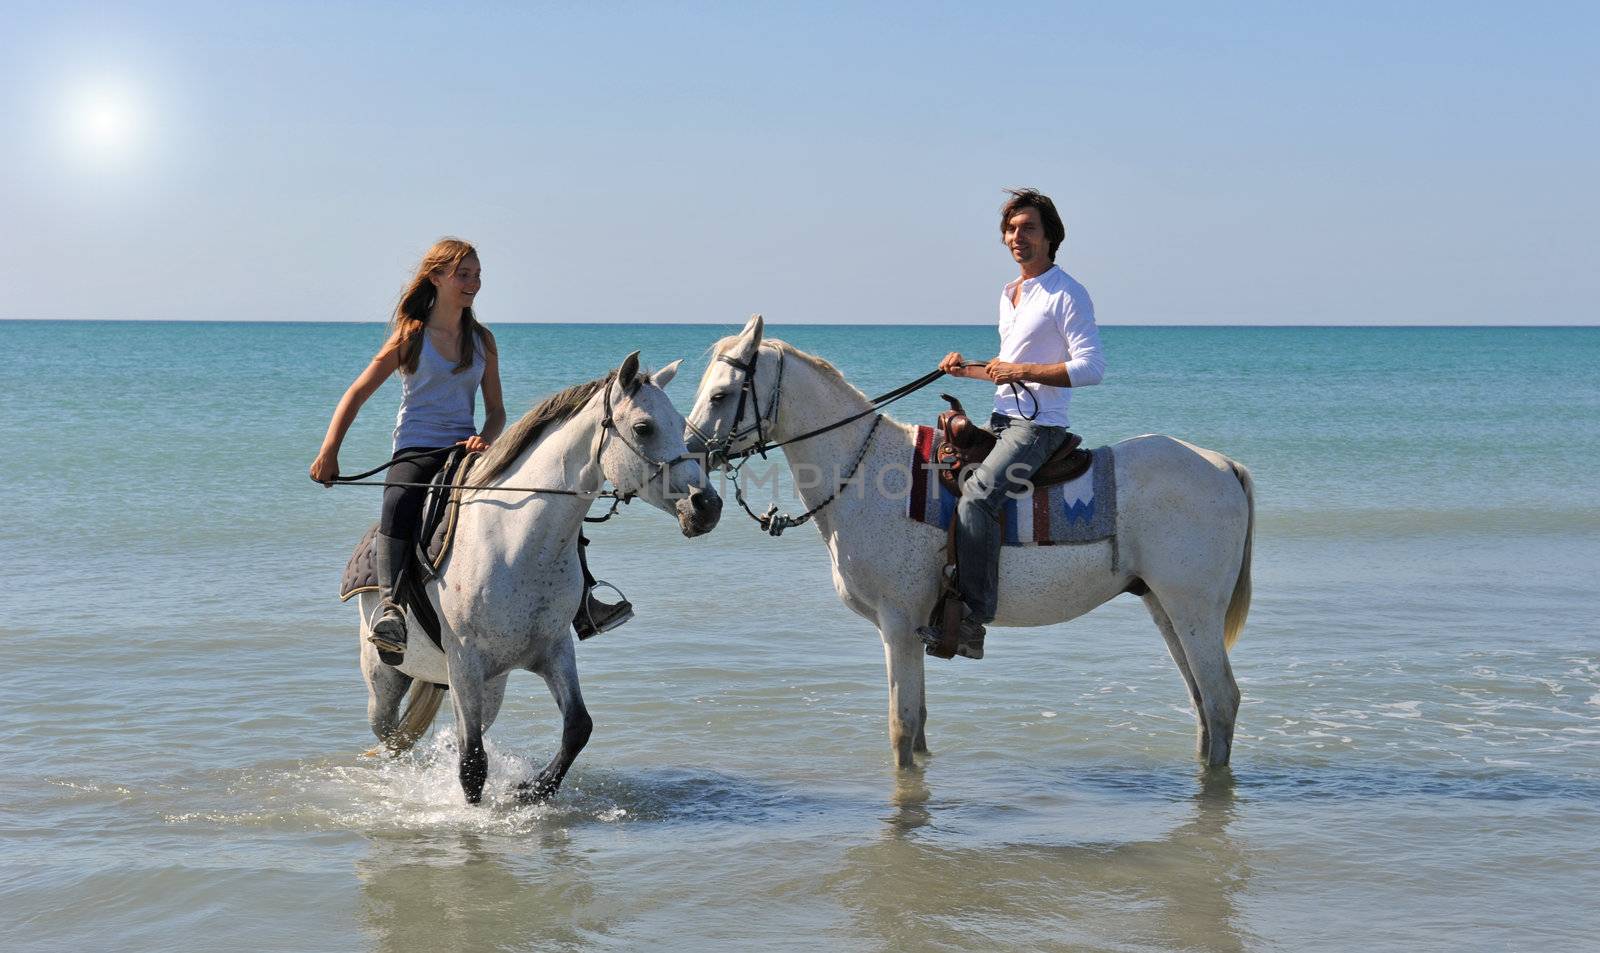 horseback riding in the sea by cynoclub